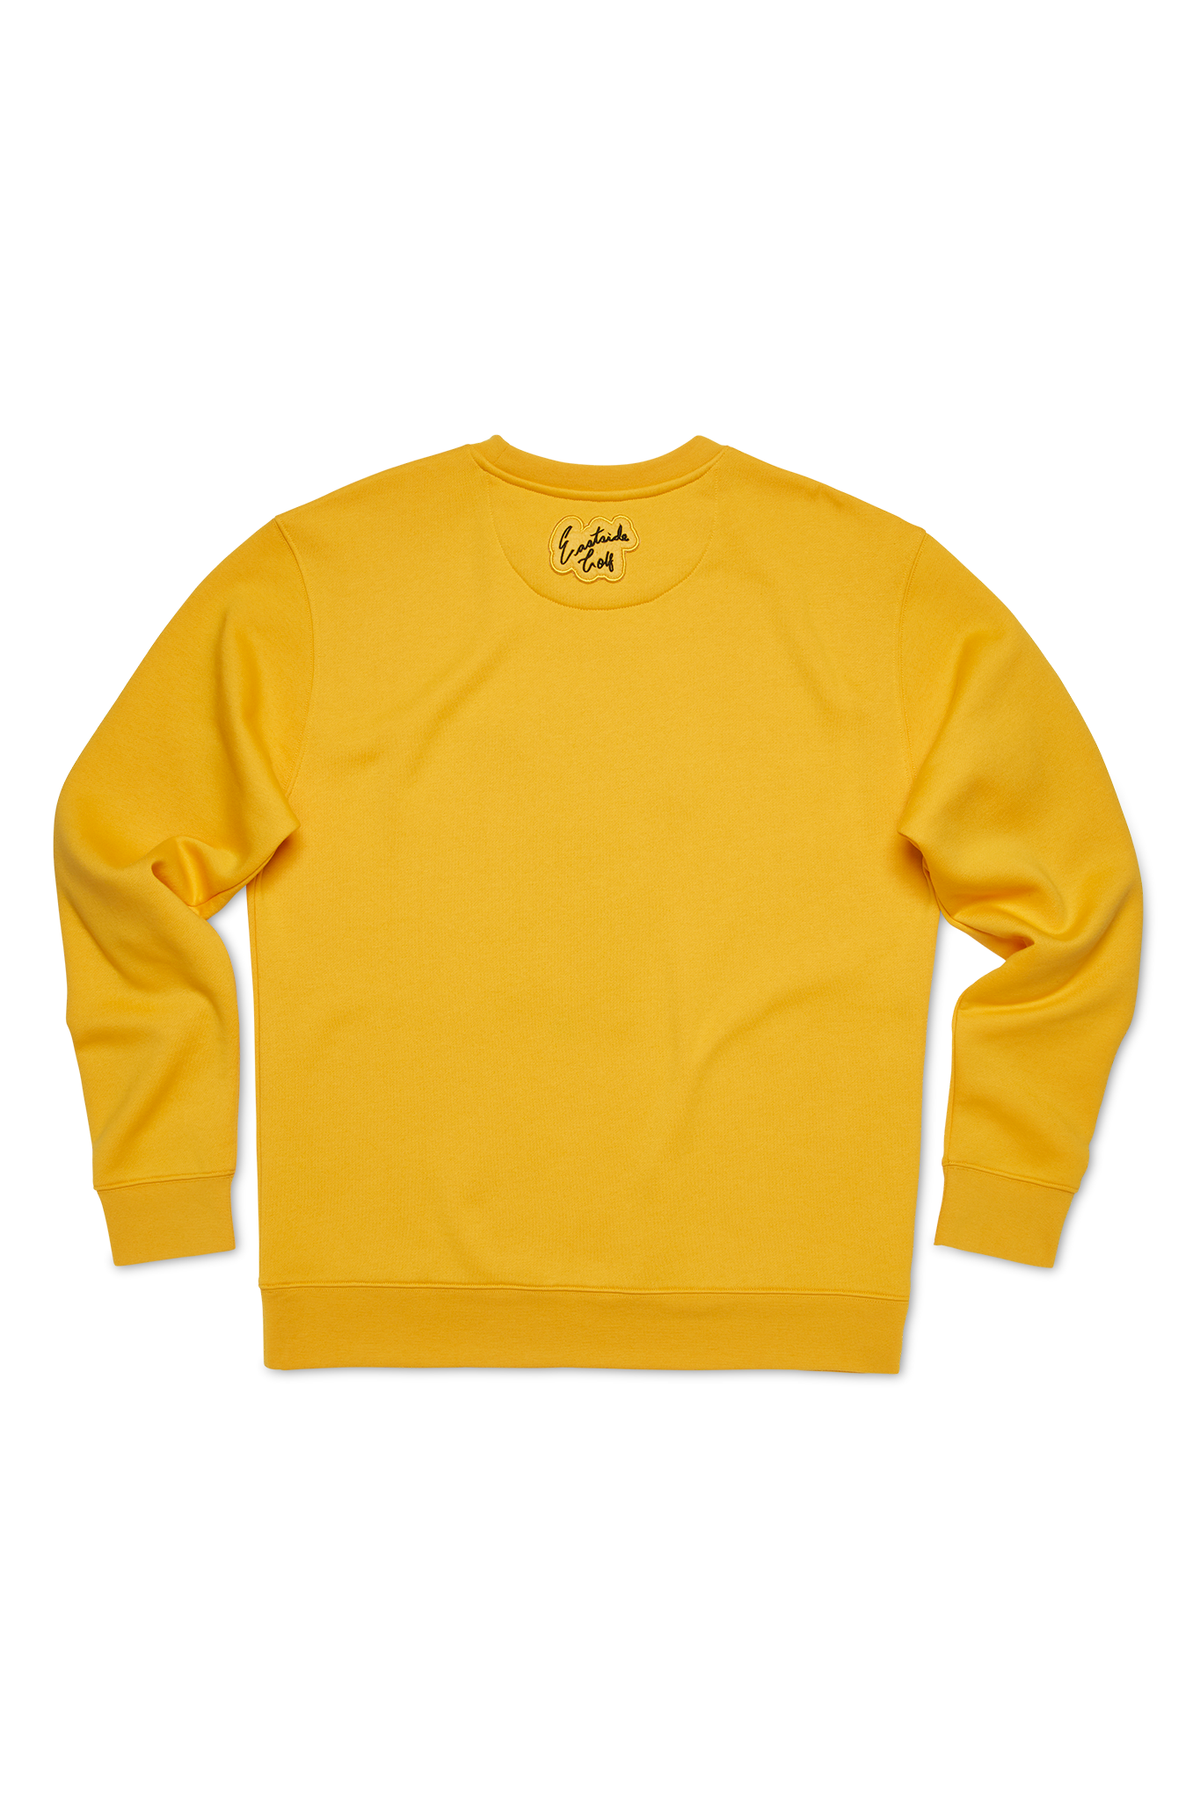 Eastside Golf Men's Core Sweatshirt Old Gold